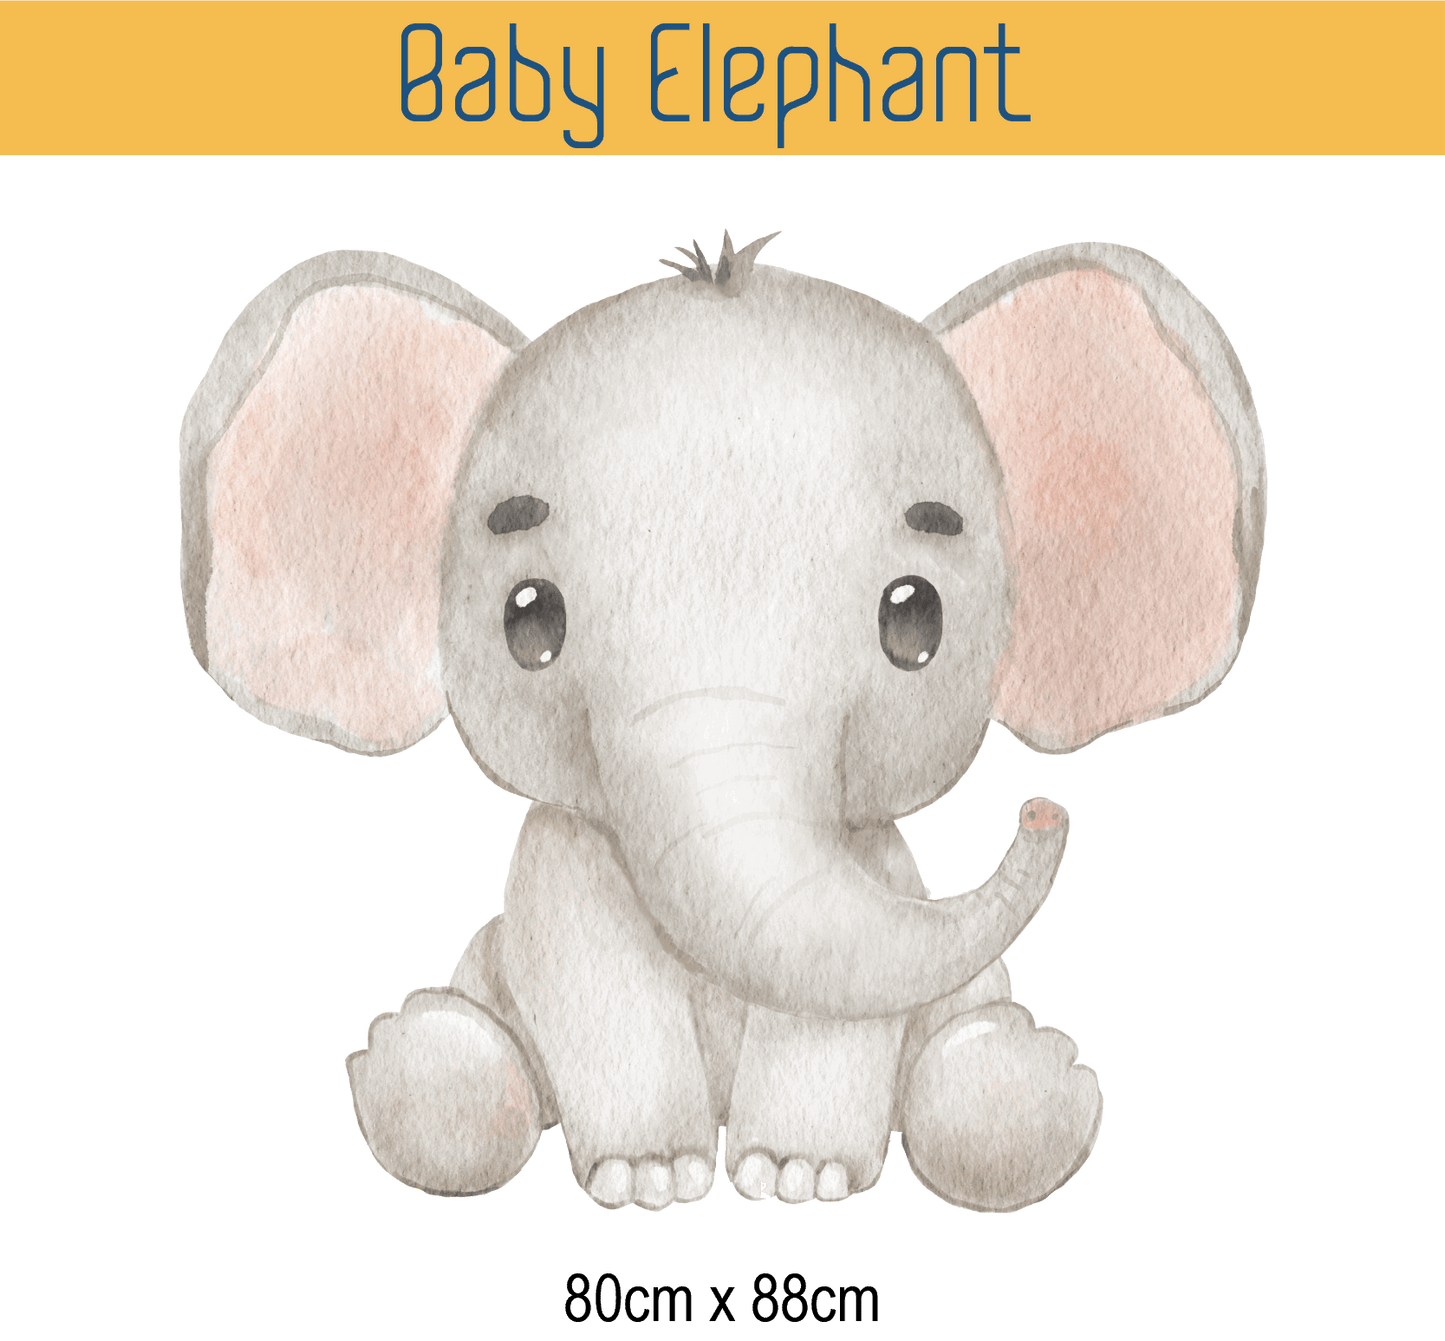 Baby Elephant Wall Sticker Decal